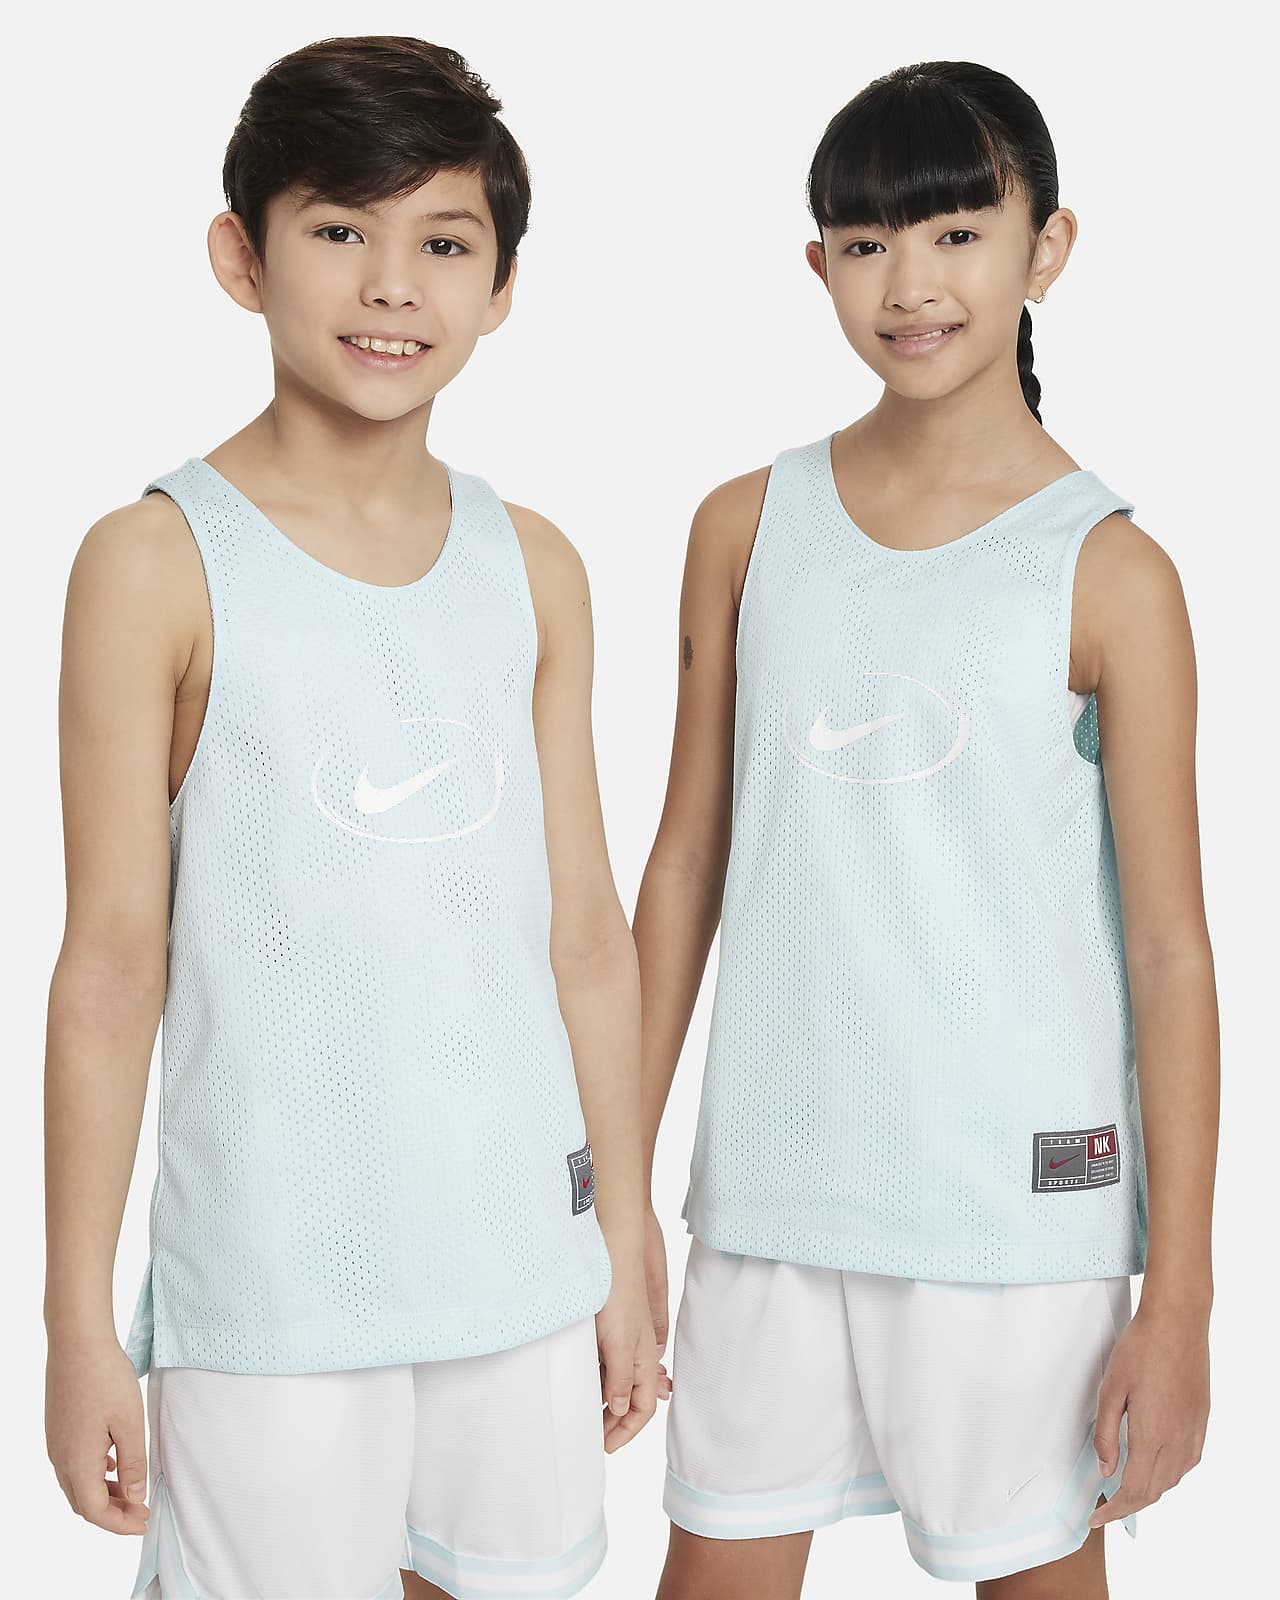 Nike Culture of Basketball Wendbares Basketballtrikot für ältere Kinder